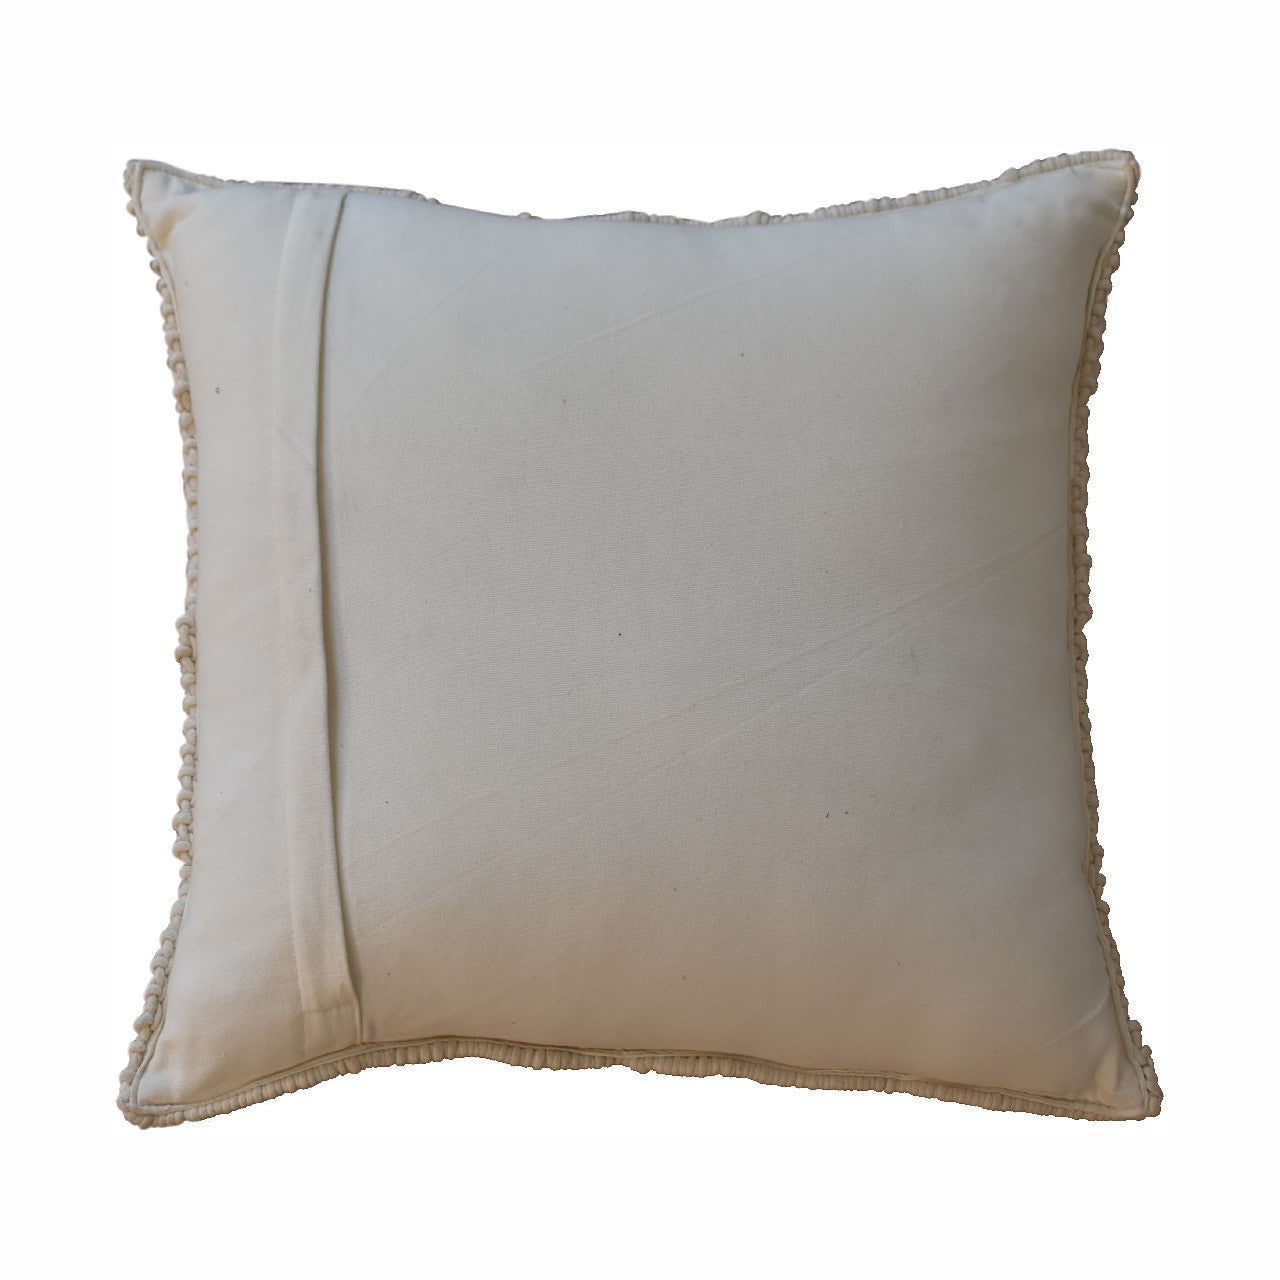 Esmi Cushion Set of 2 - Natural White